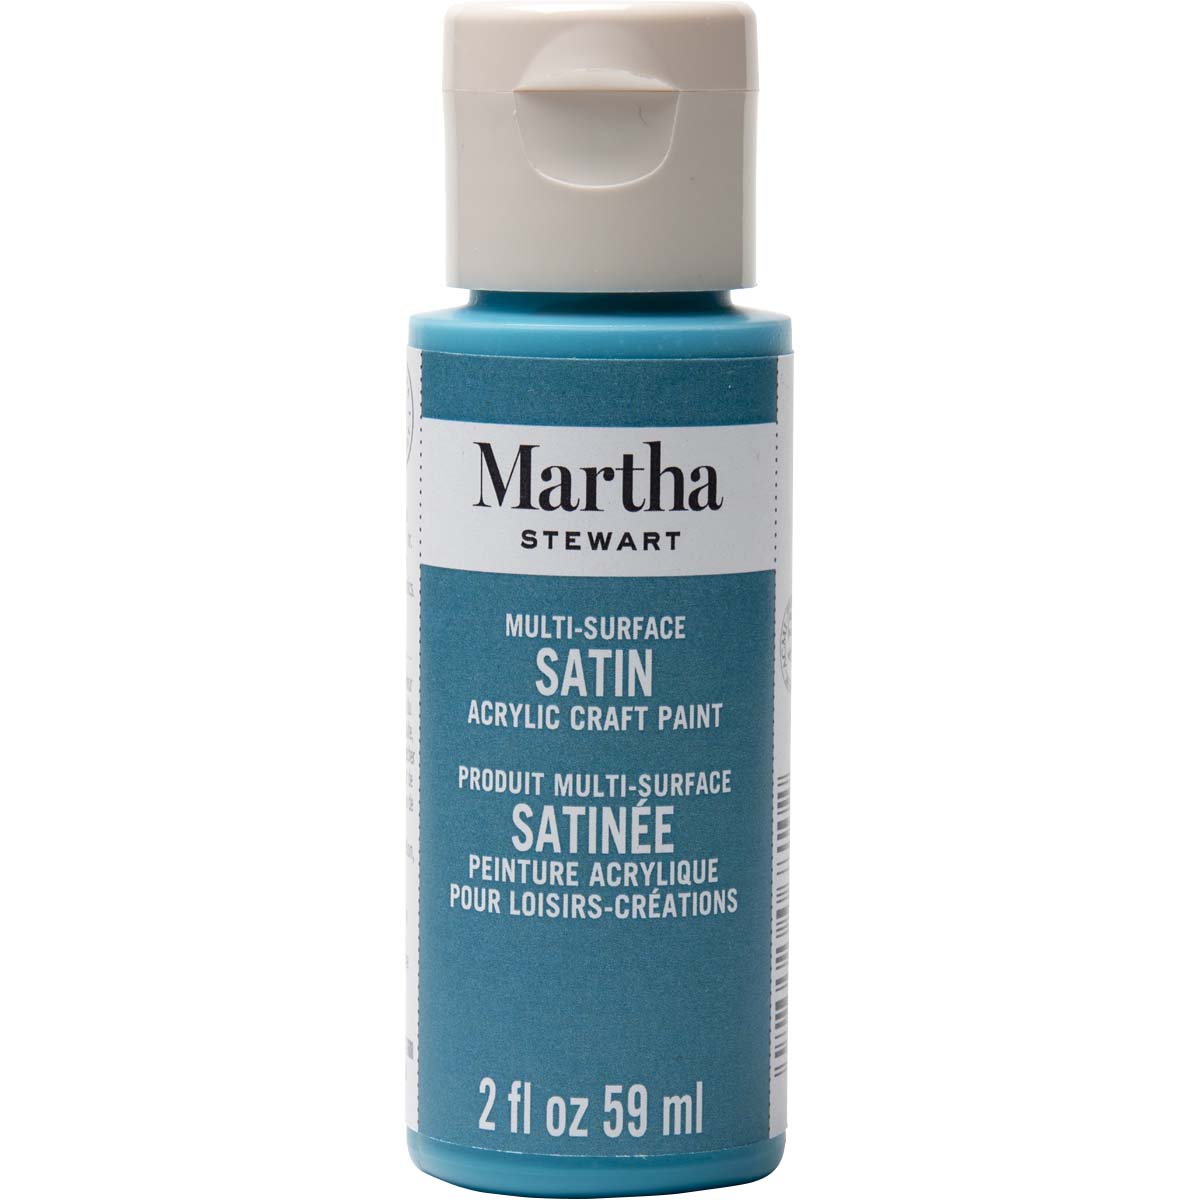 Martha Stewart ® Multi-Surface Satin Acrylic Craft Paint - Peacock Feather, 2 oz. - 33503CA